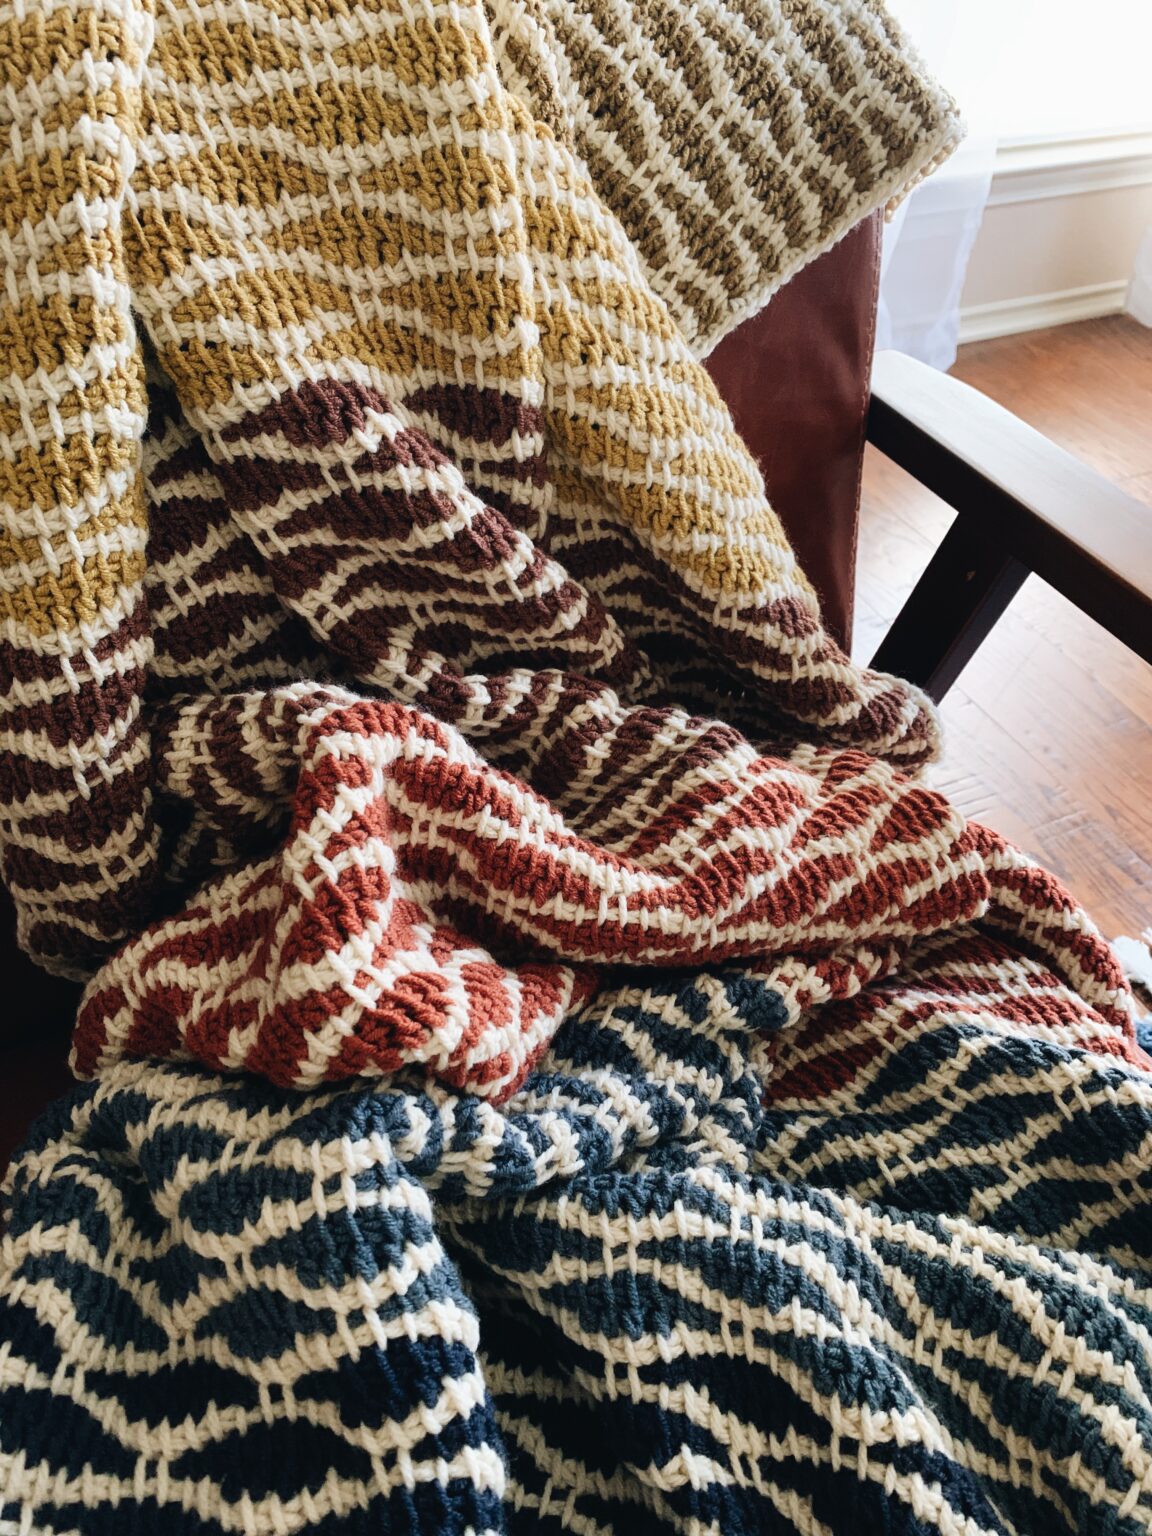 The Jessica Throw - A Tunisian Crochet Wave Stitch Pattern